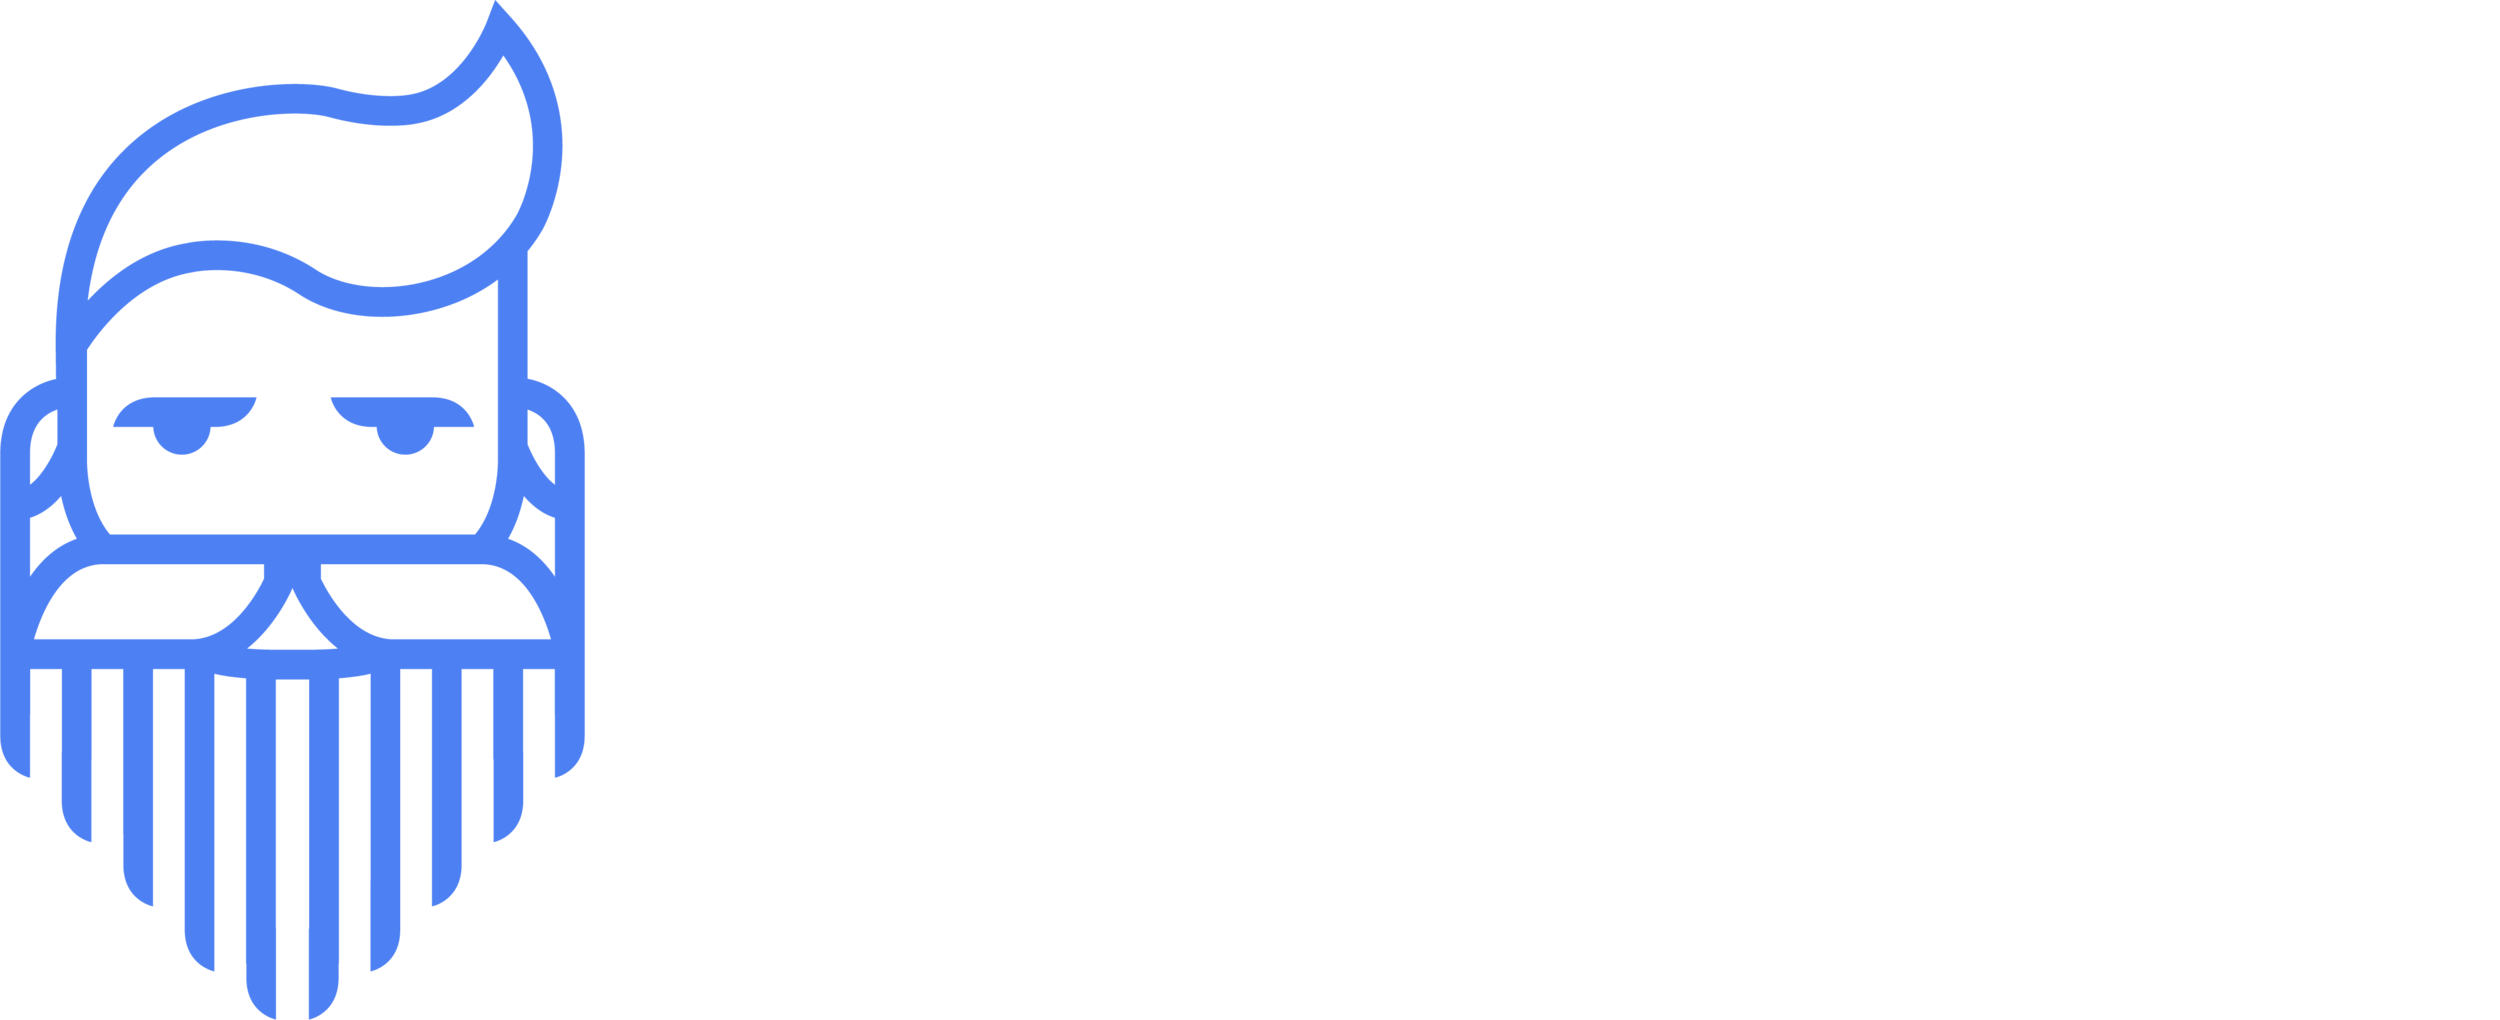 Benj